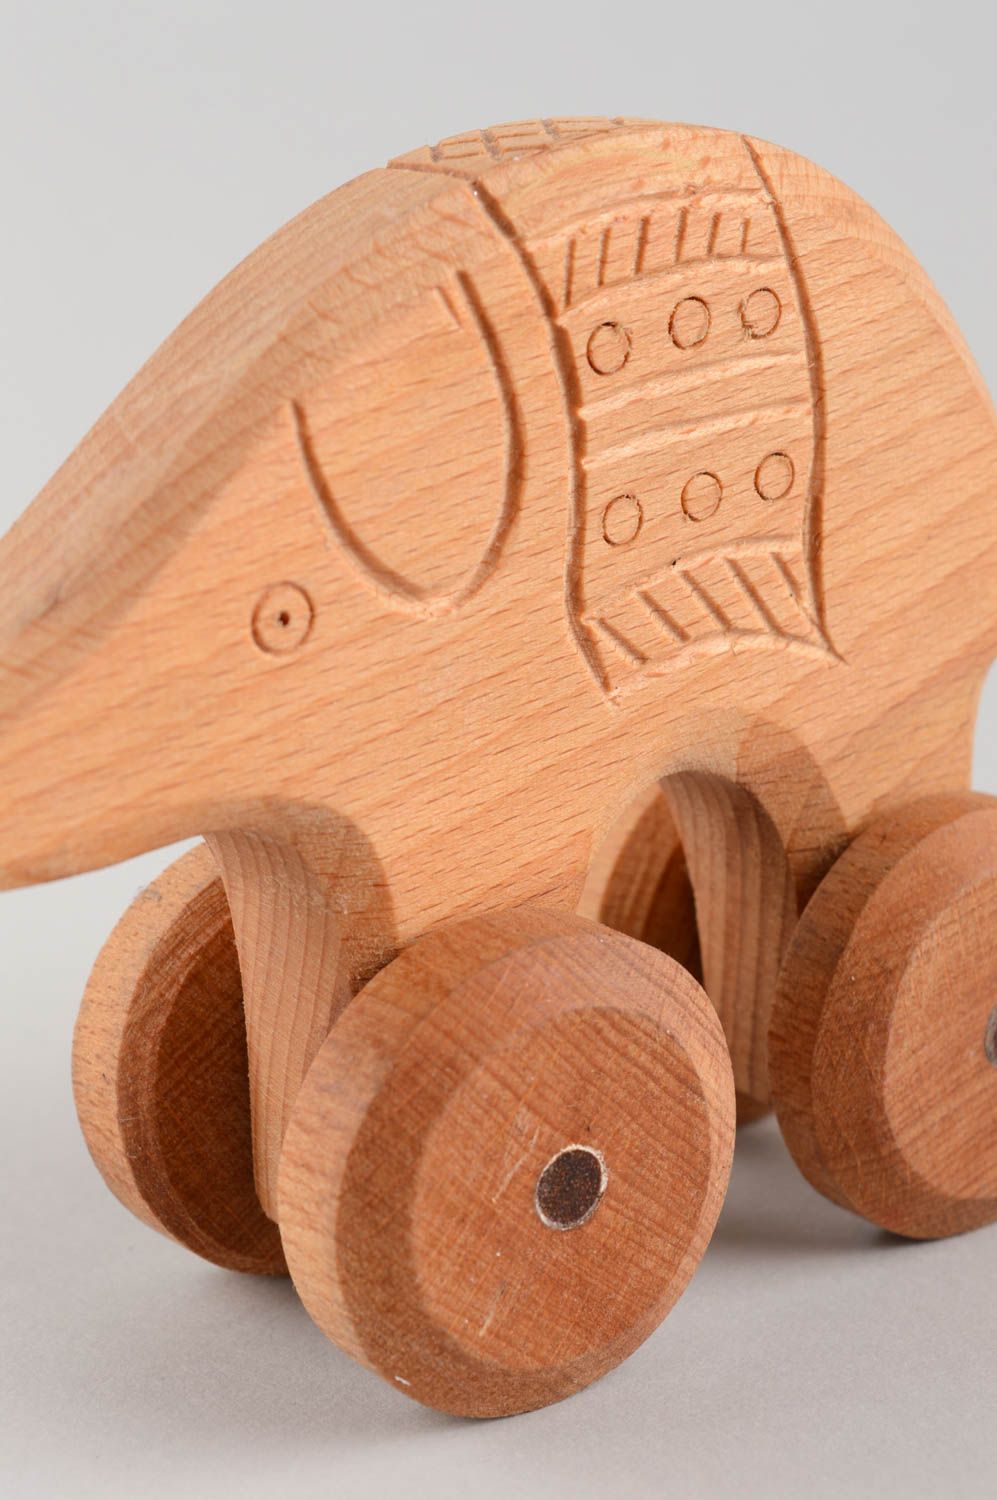 Juguete de madera hecho a mano para niño elefante juguete ecológico foto 5